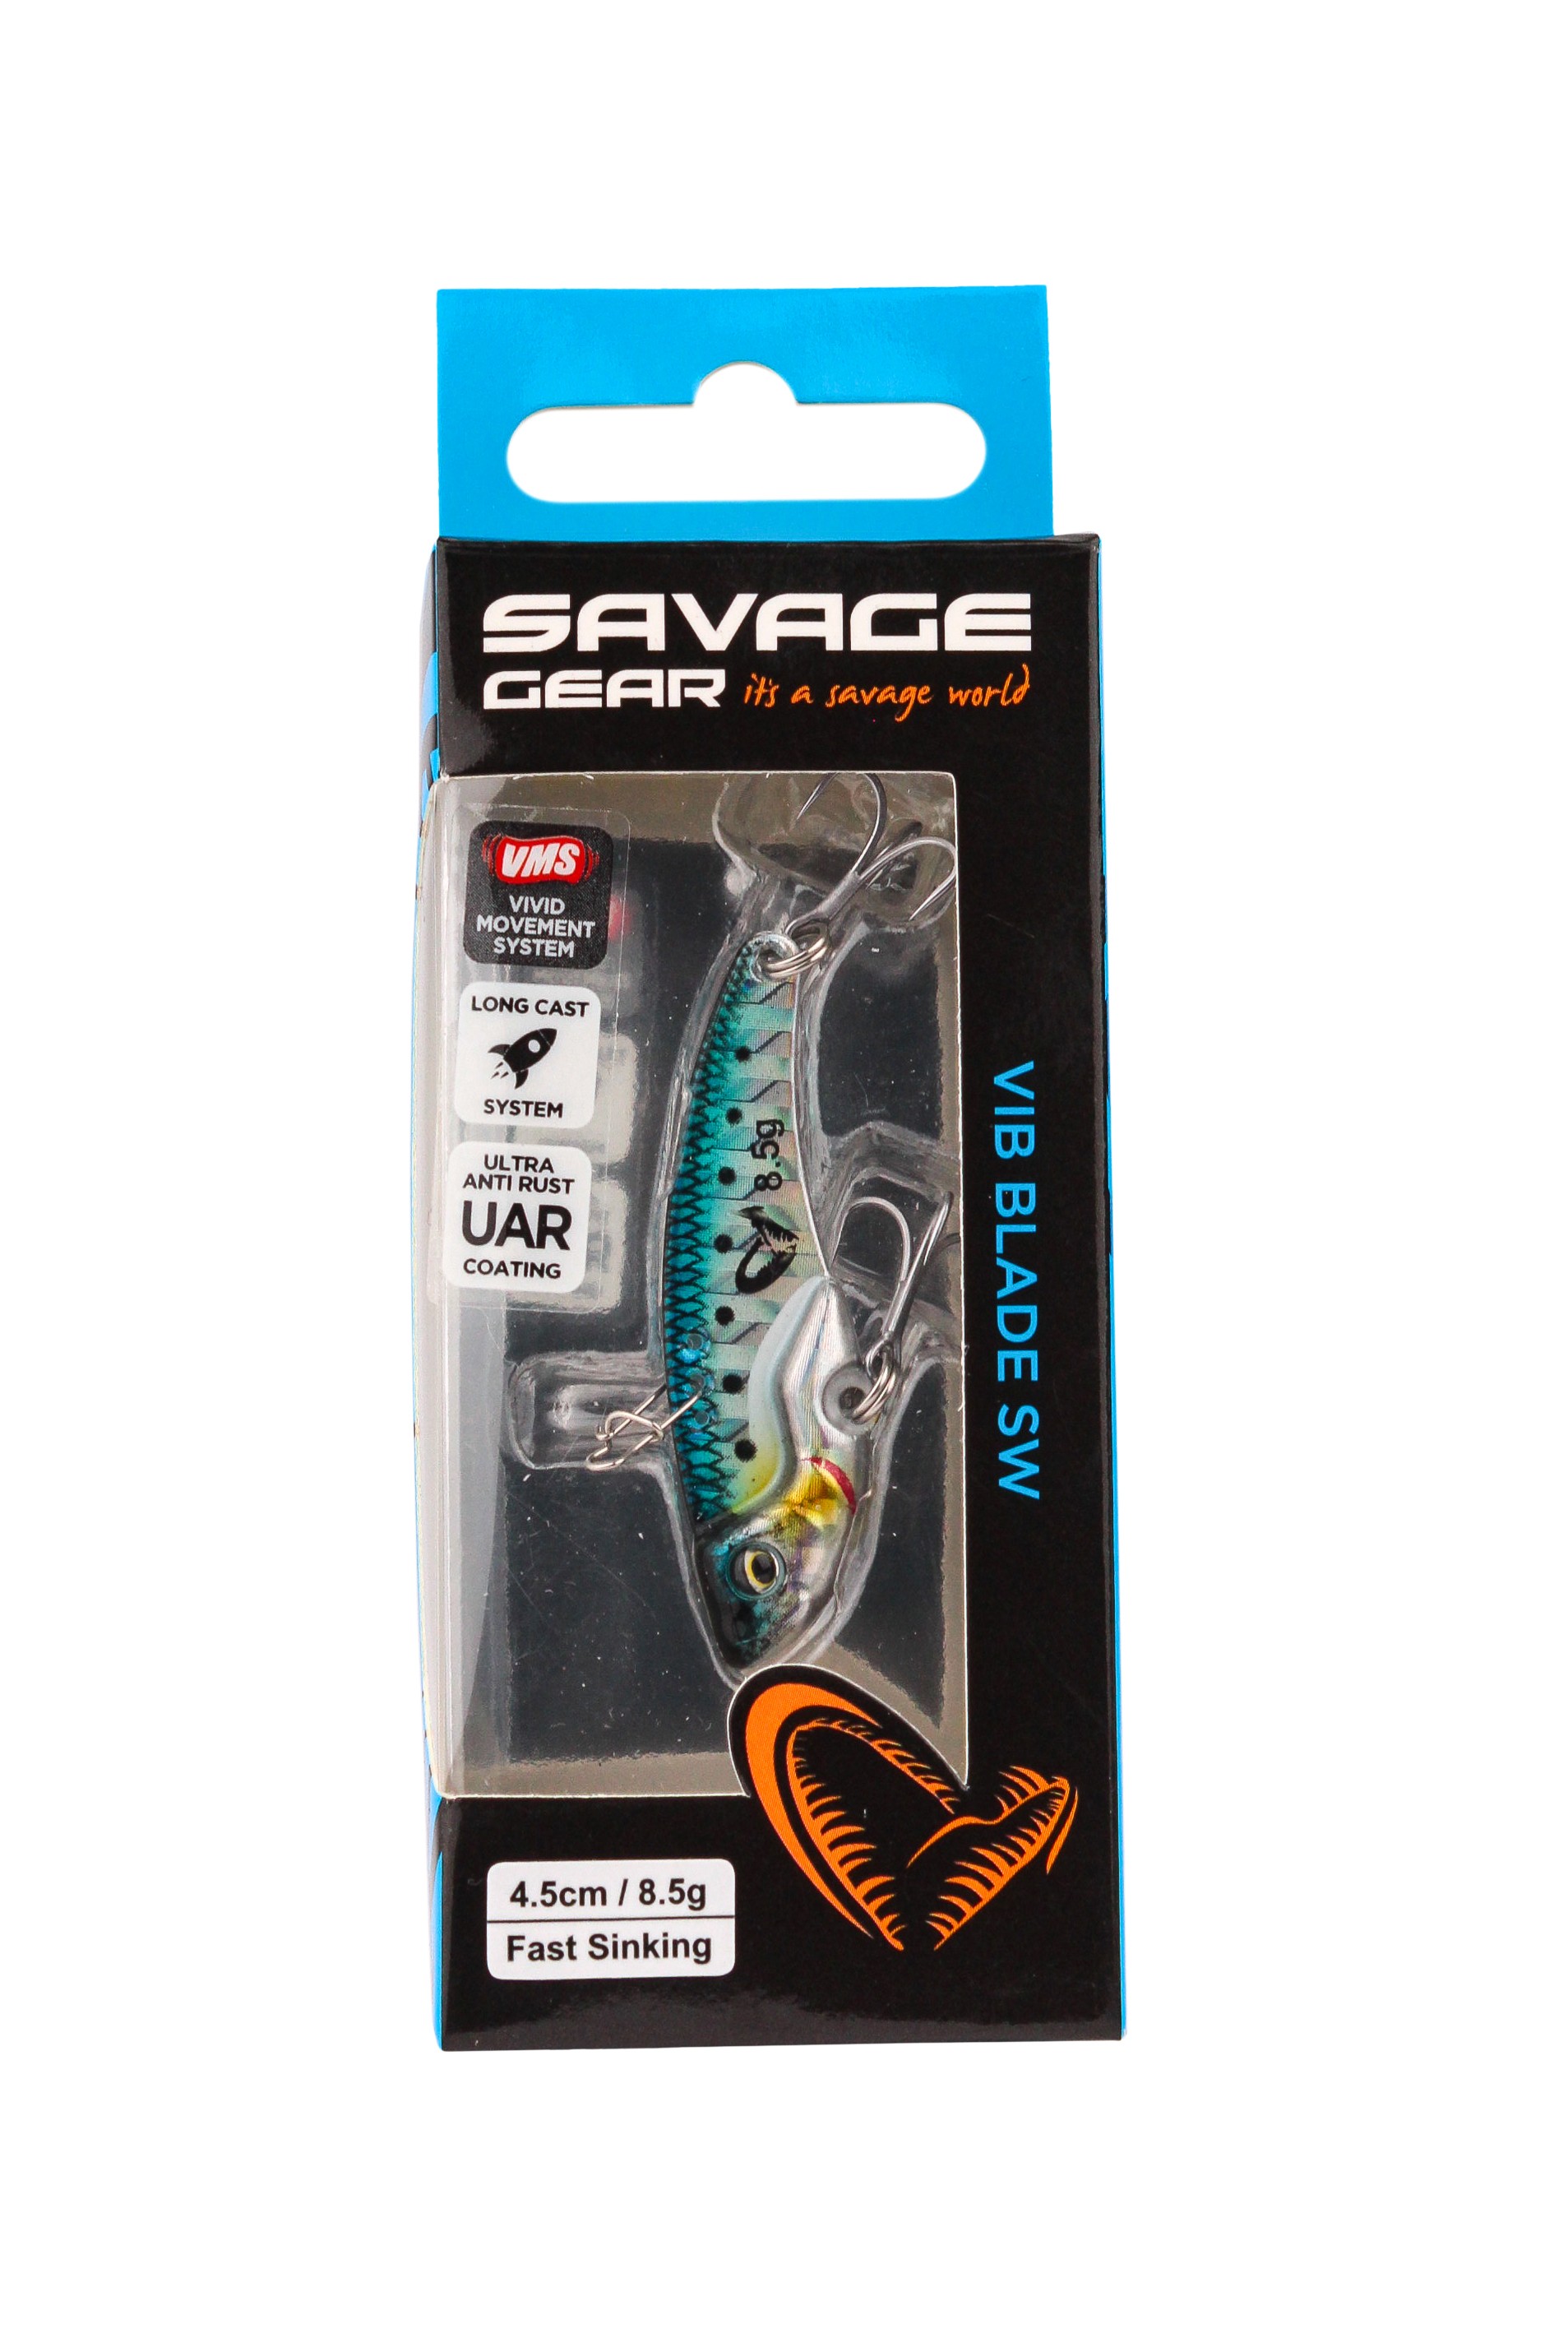 Блесна Savage Gear Vib blade SW 4,5см 8,5гр fast sinking sardine - фото 1